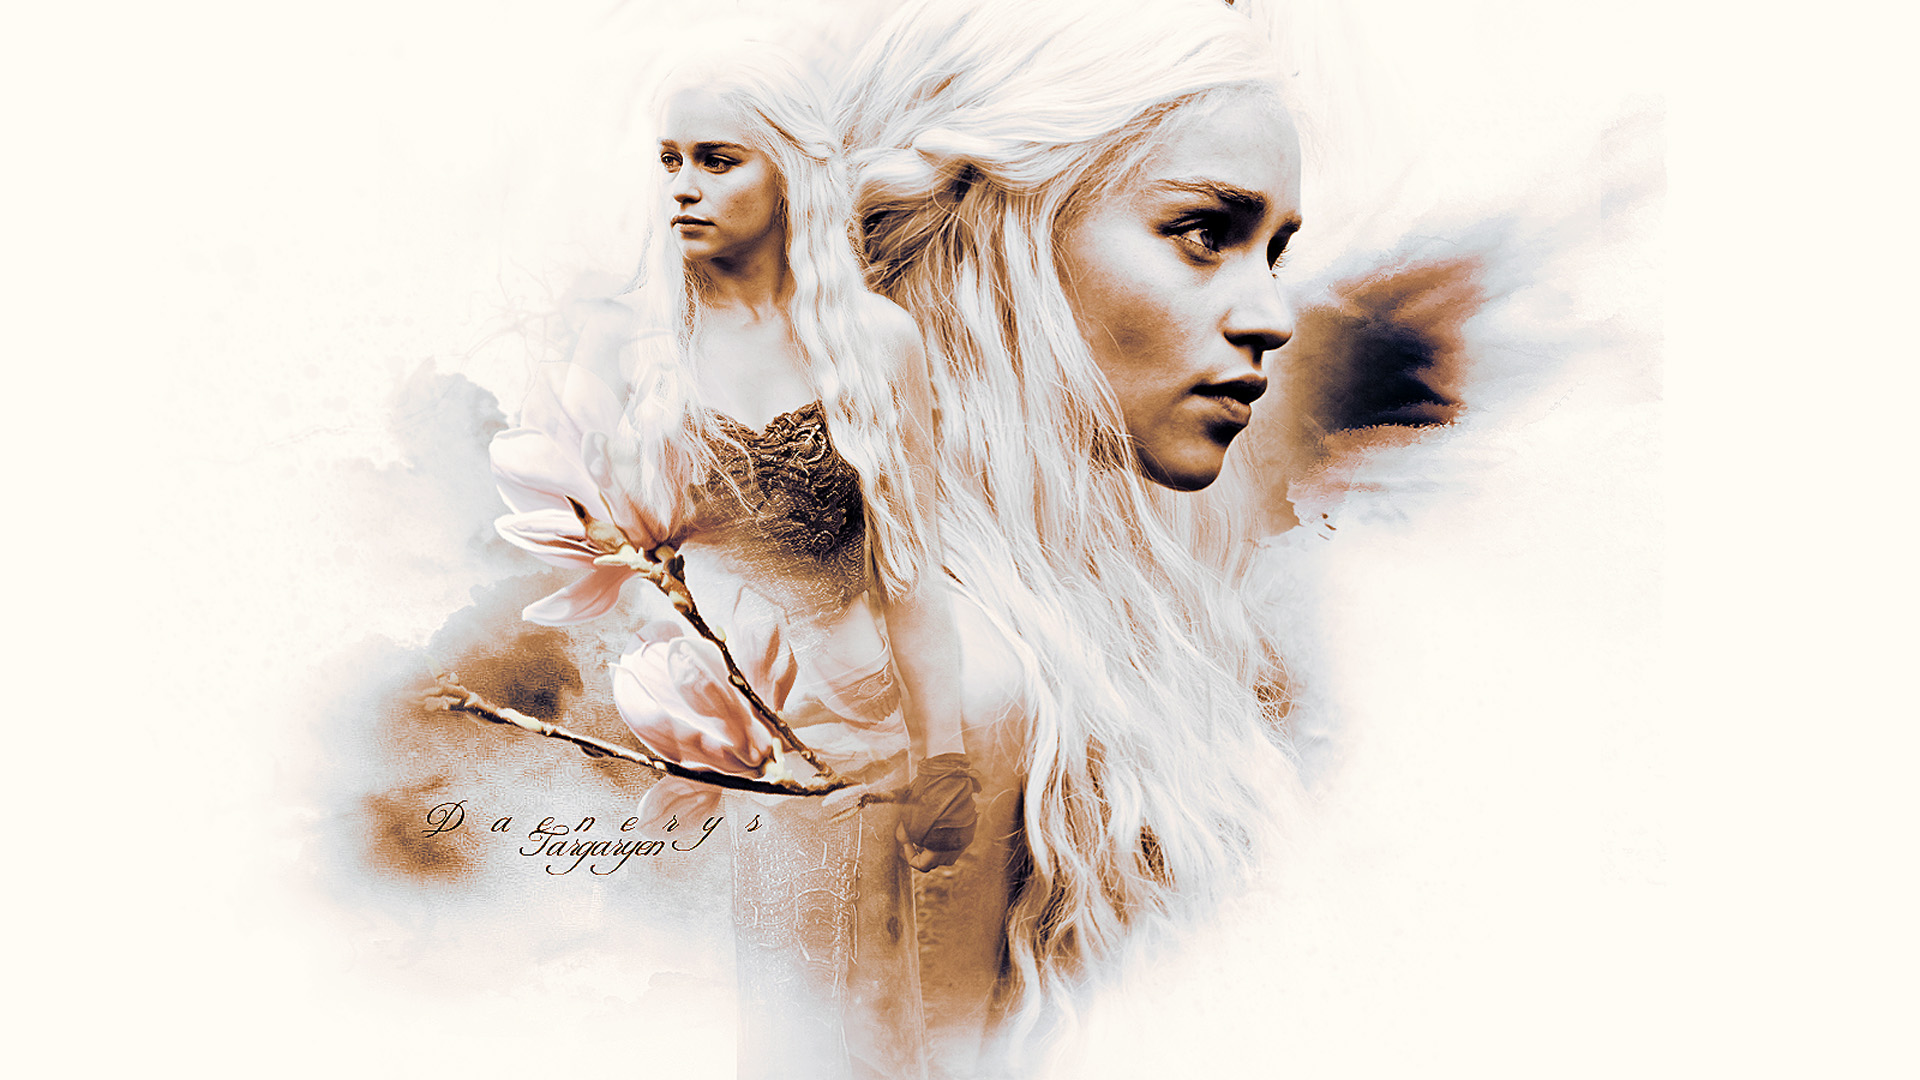 1483284 Daenerys Targaryen Wallpapers HD free wallpapers backgrounds